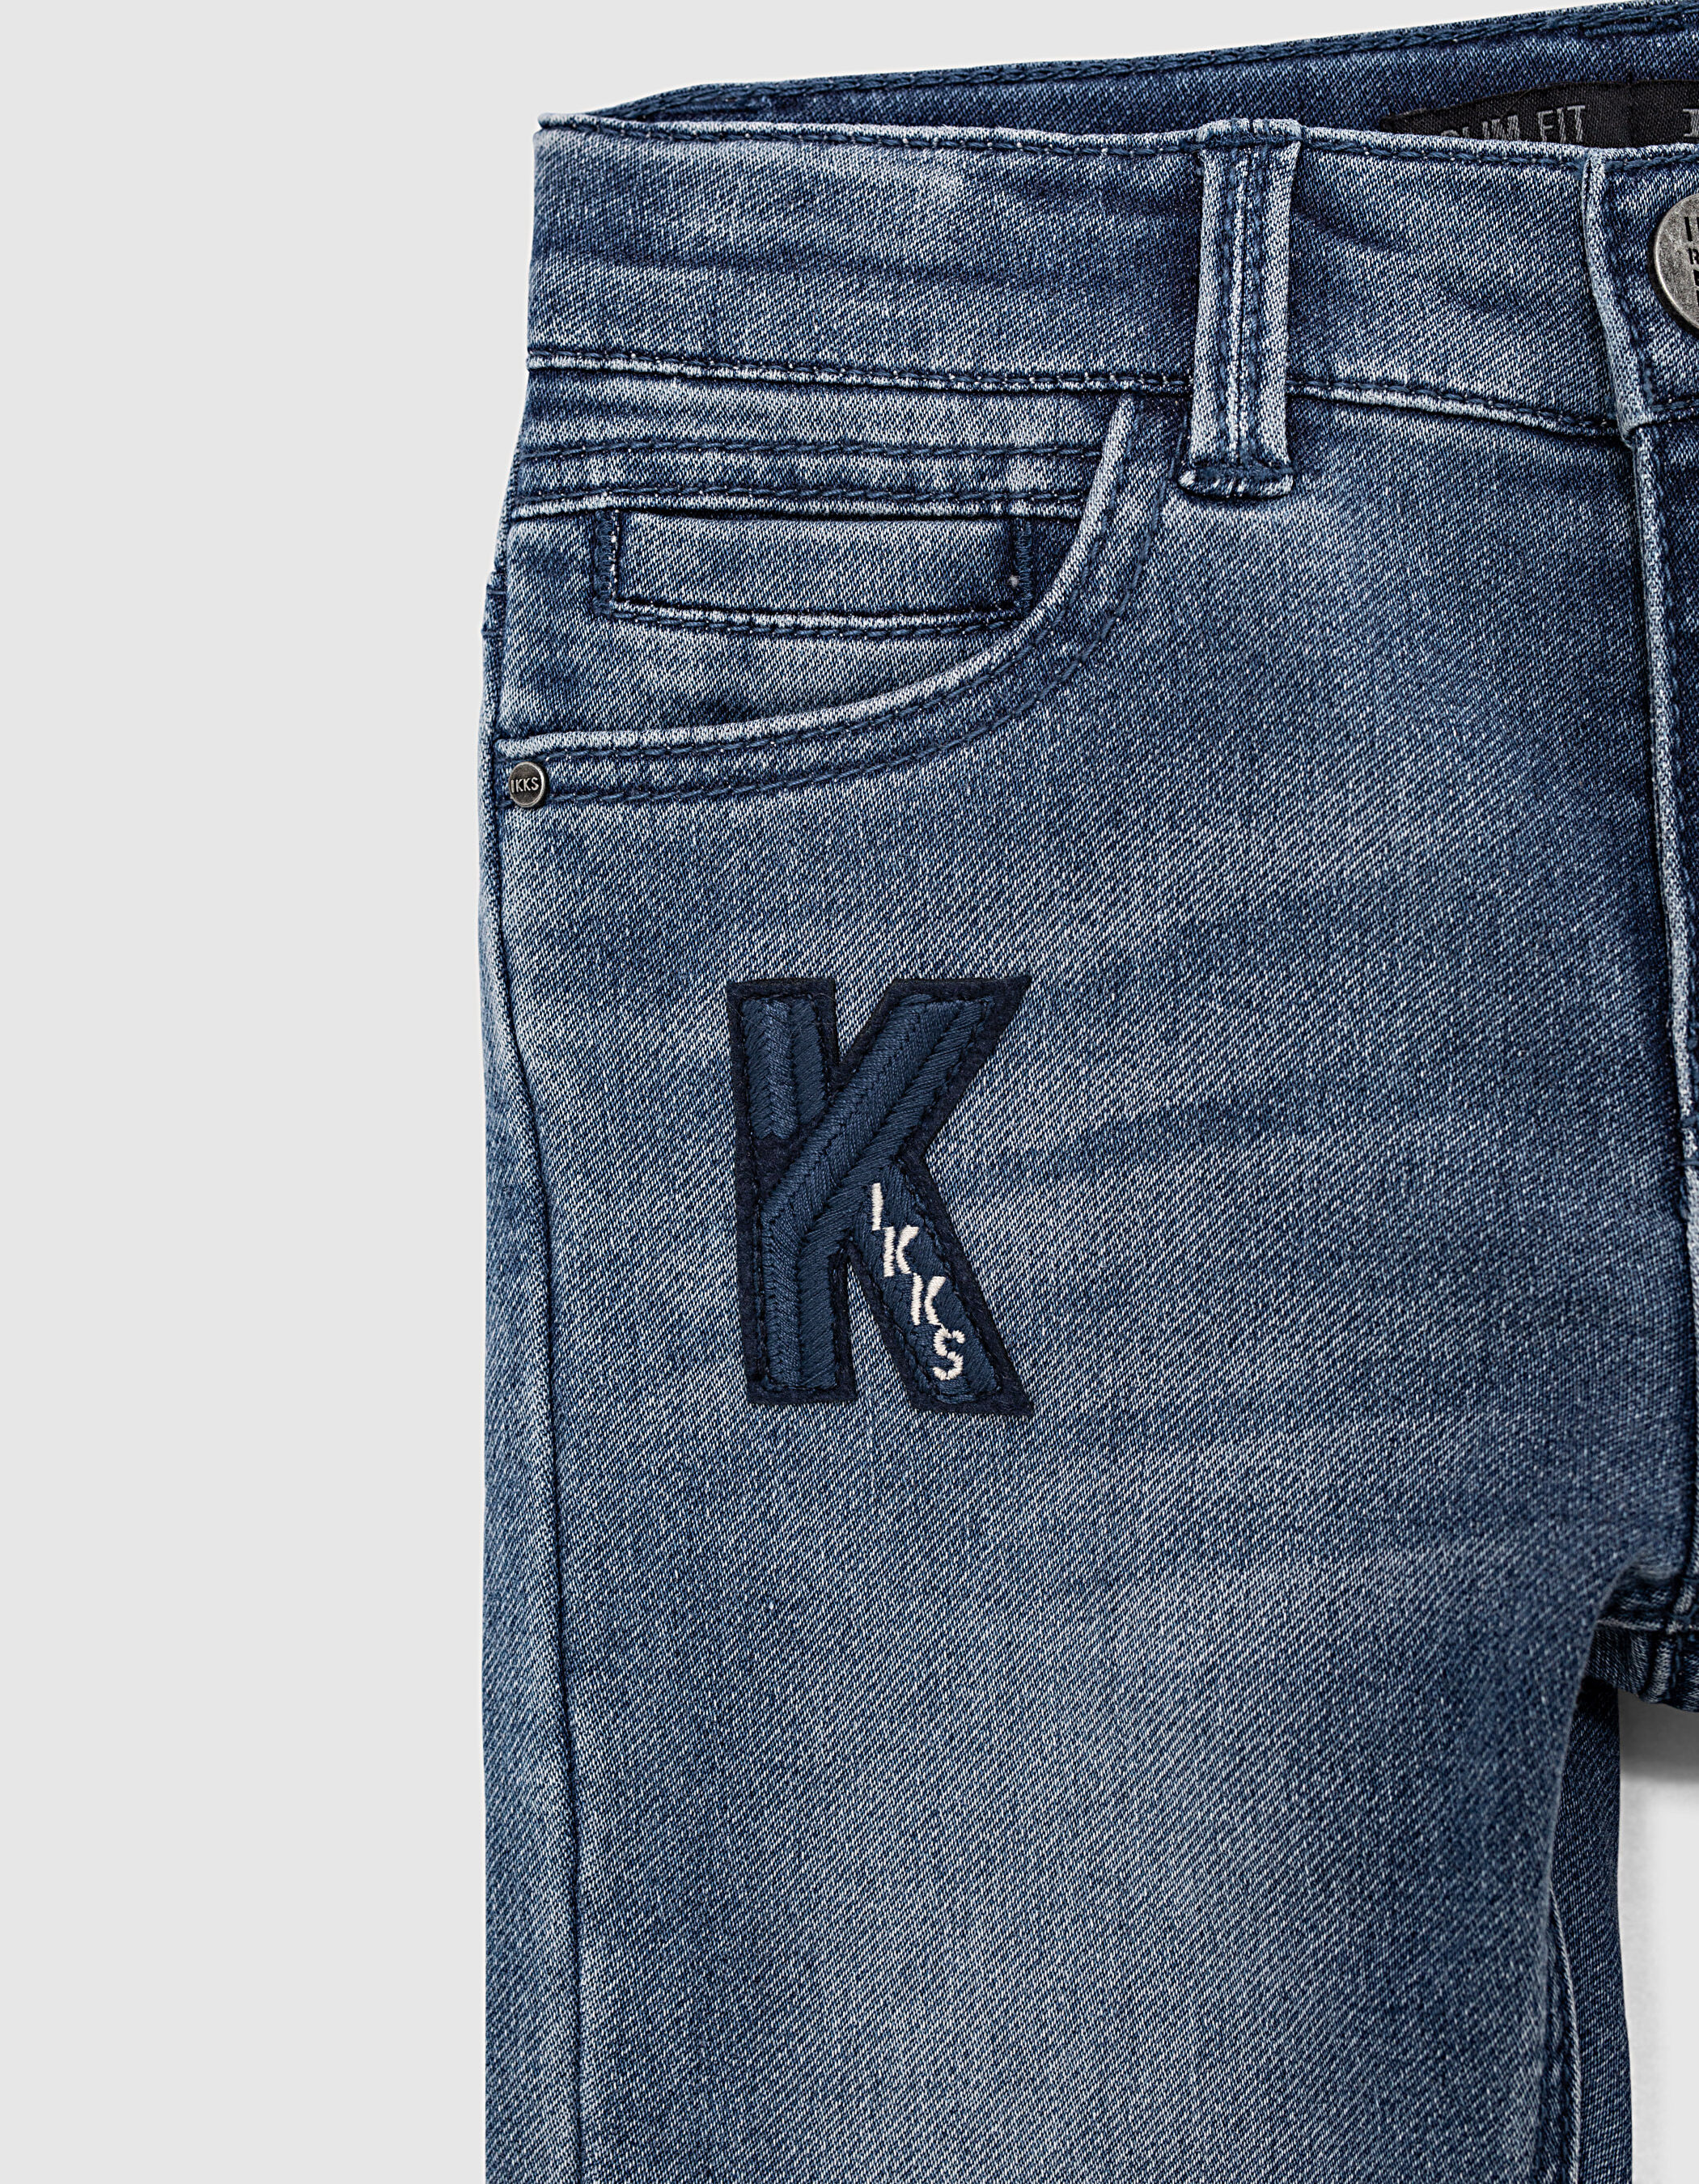 IKKS Junior Pantalon Jean Denim Patch Bleu 18-24 Mois Taille Fabricant:18M Bébé garçon Stone Blue 85